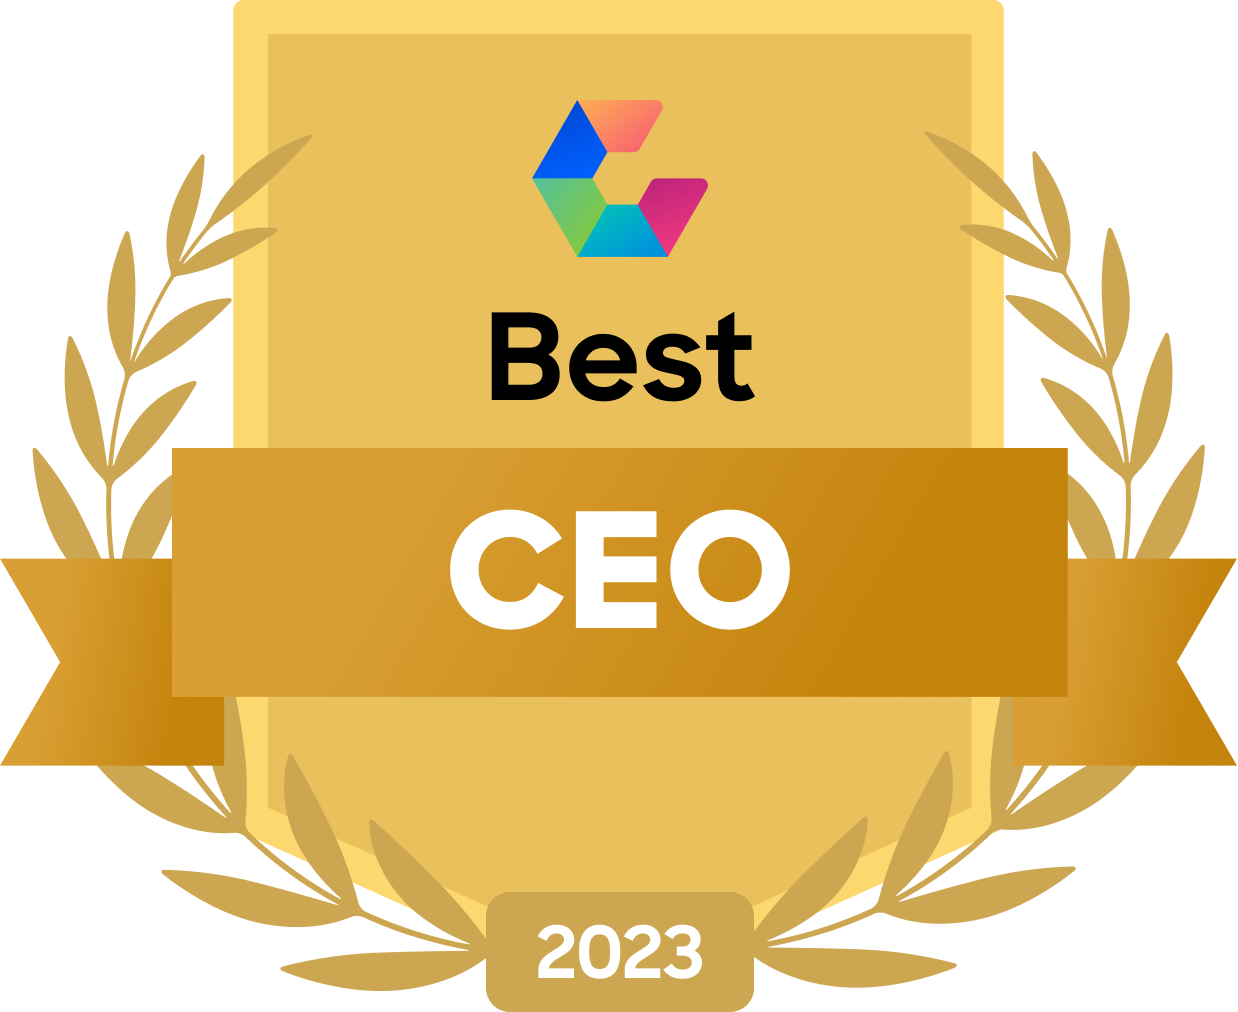 Best CEO Badge